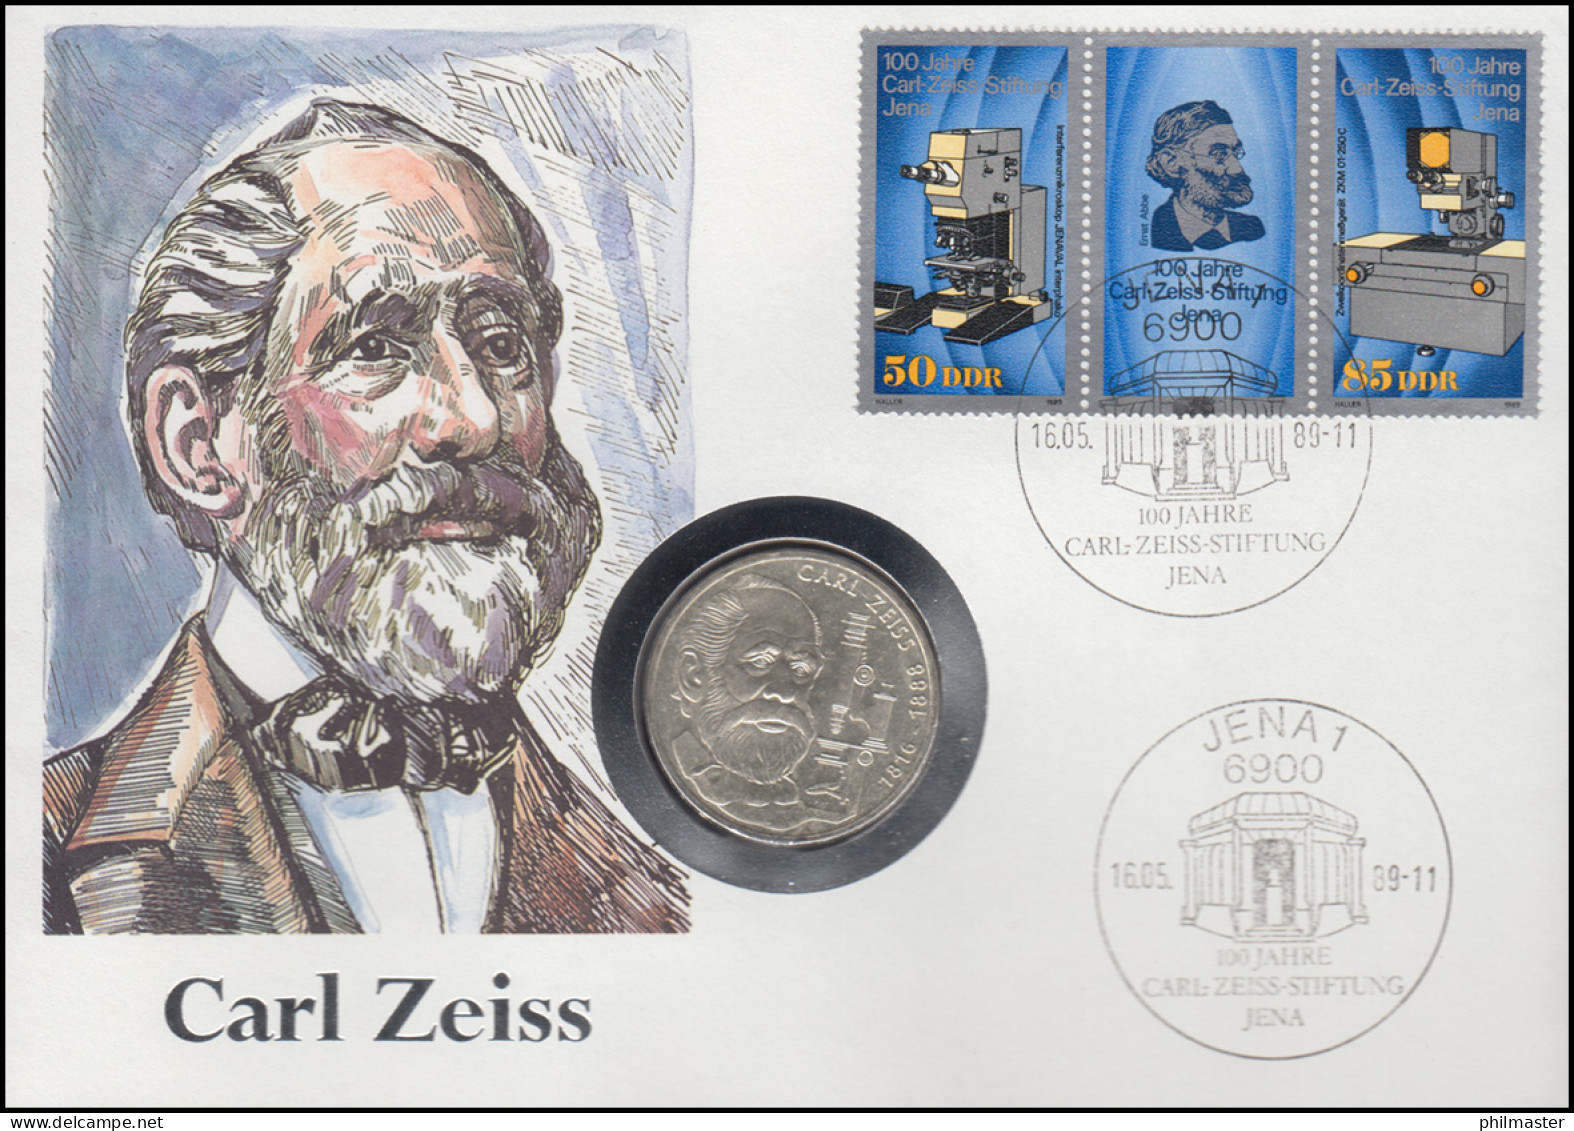 Numisbrief Carl Zeiss, 10 DM Silber / ZD DDR, ESST Jena 16.05.1989 - Enveloppes Numismatiques